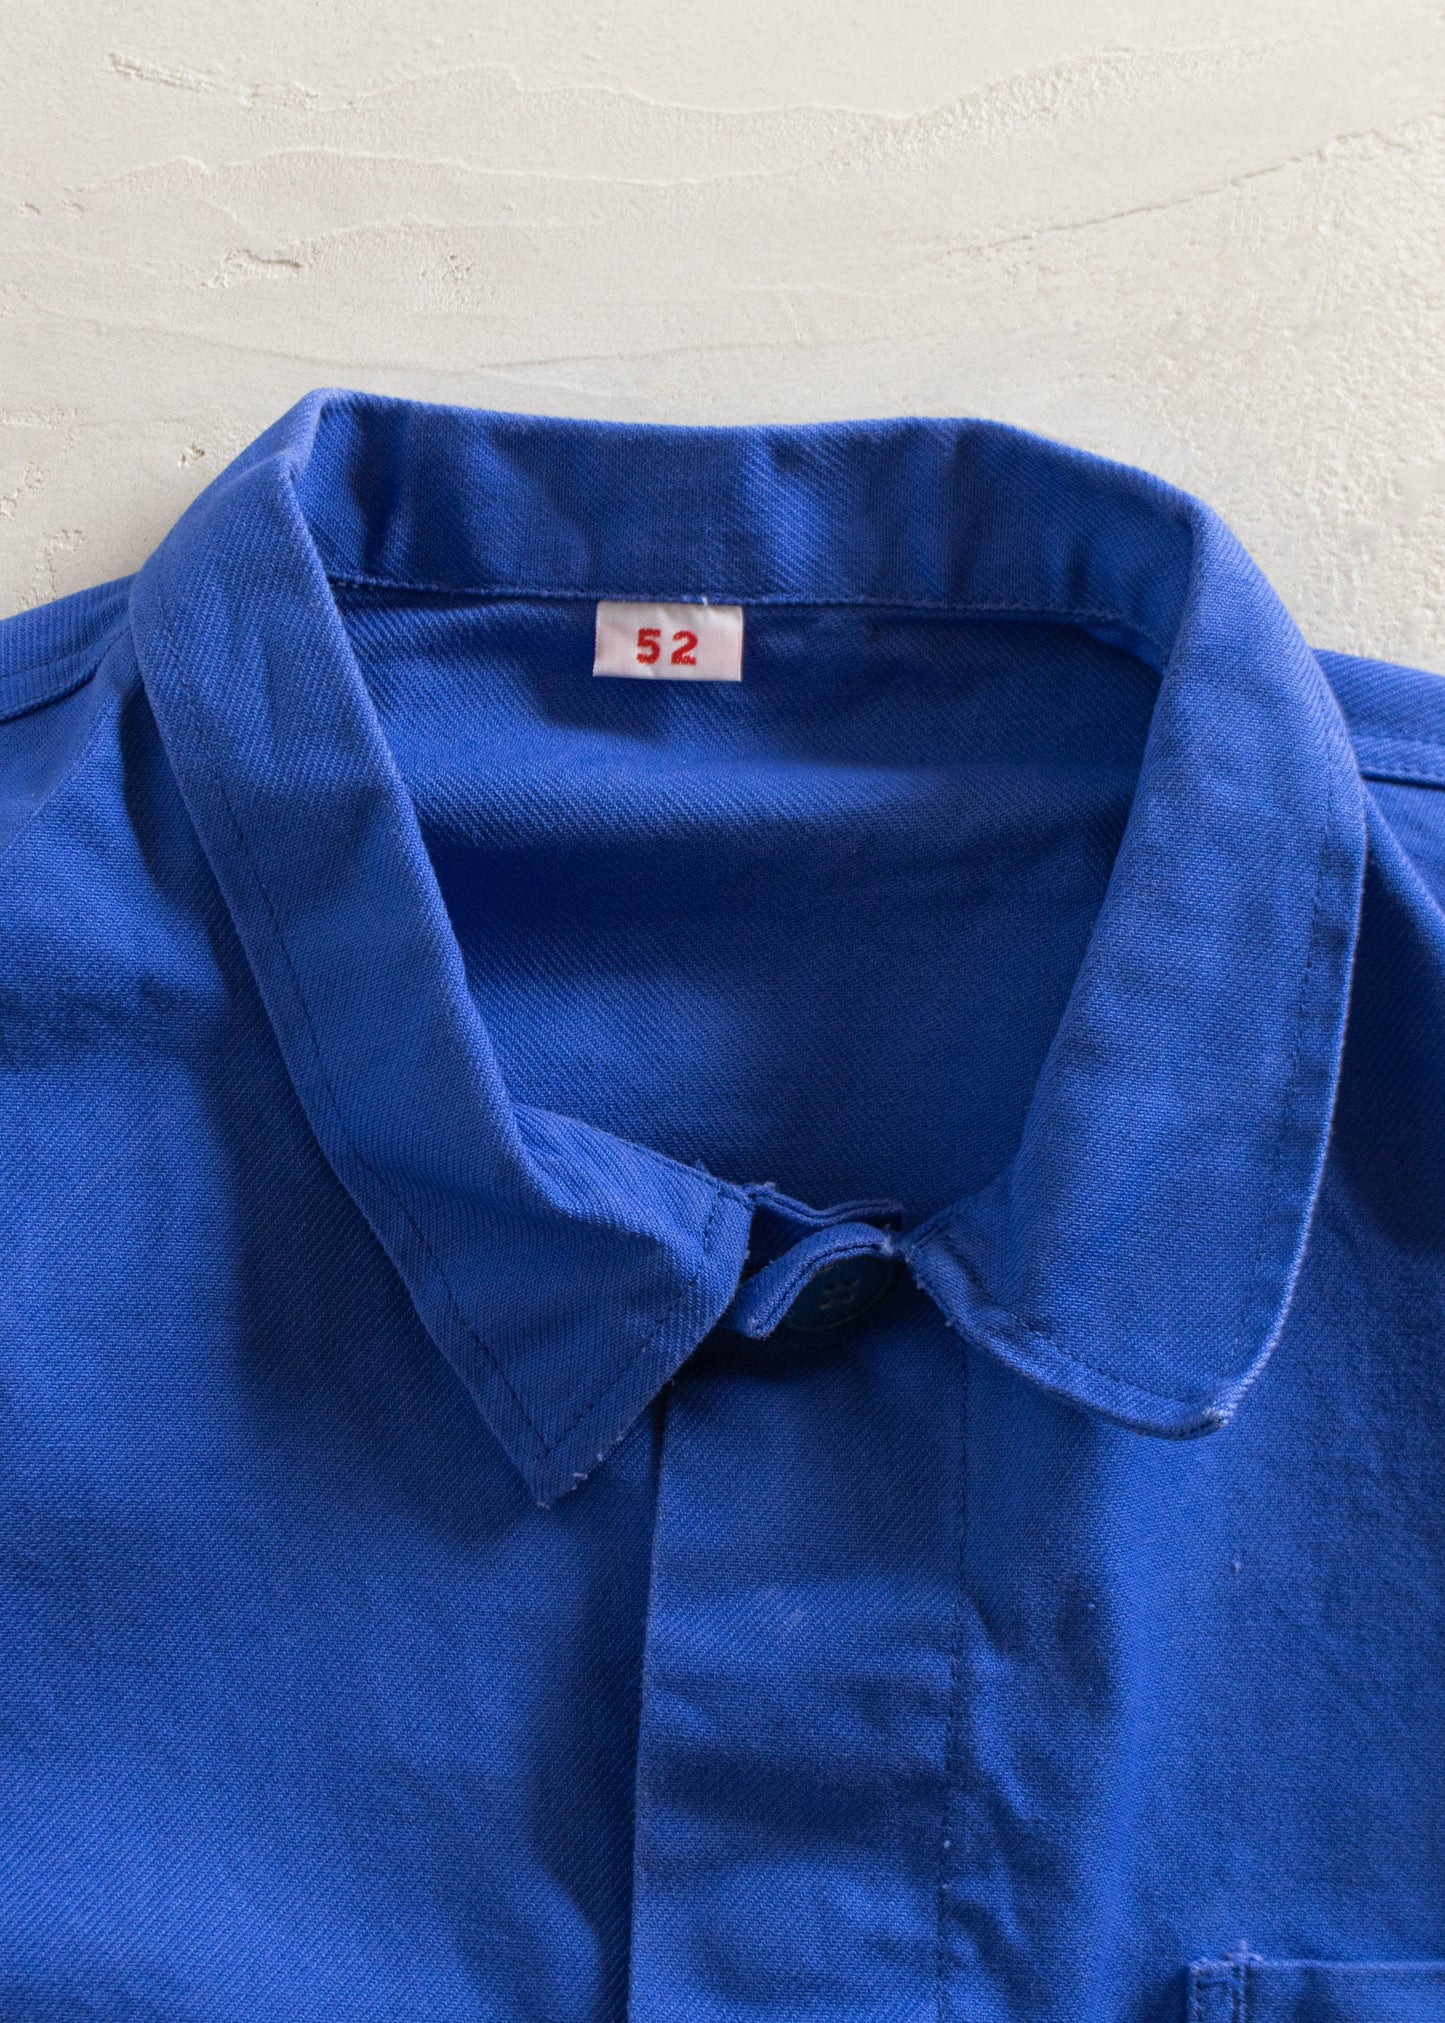 1980s Molinel French Workwear Chore Jacket Size M/L